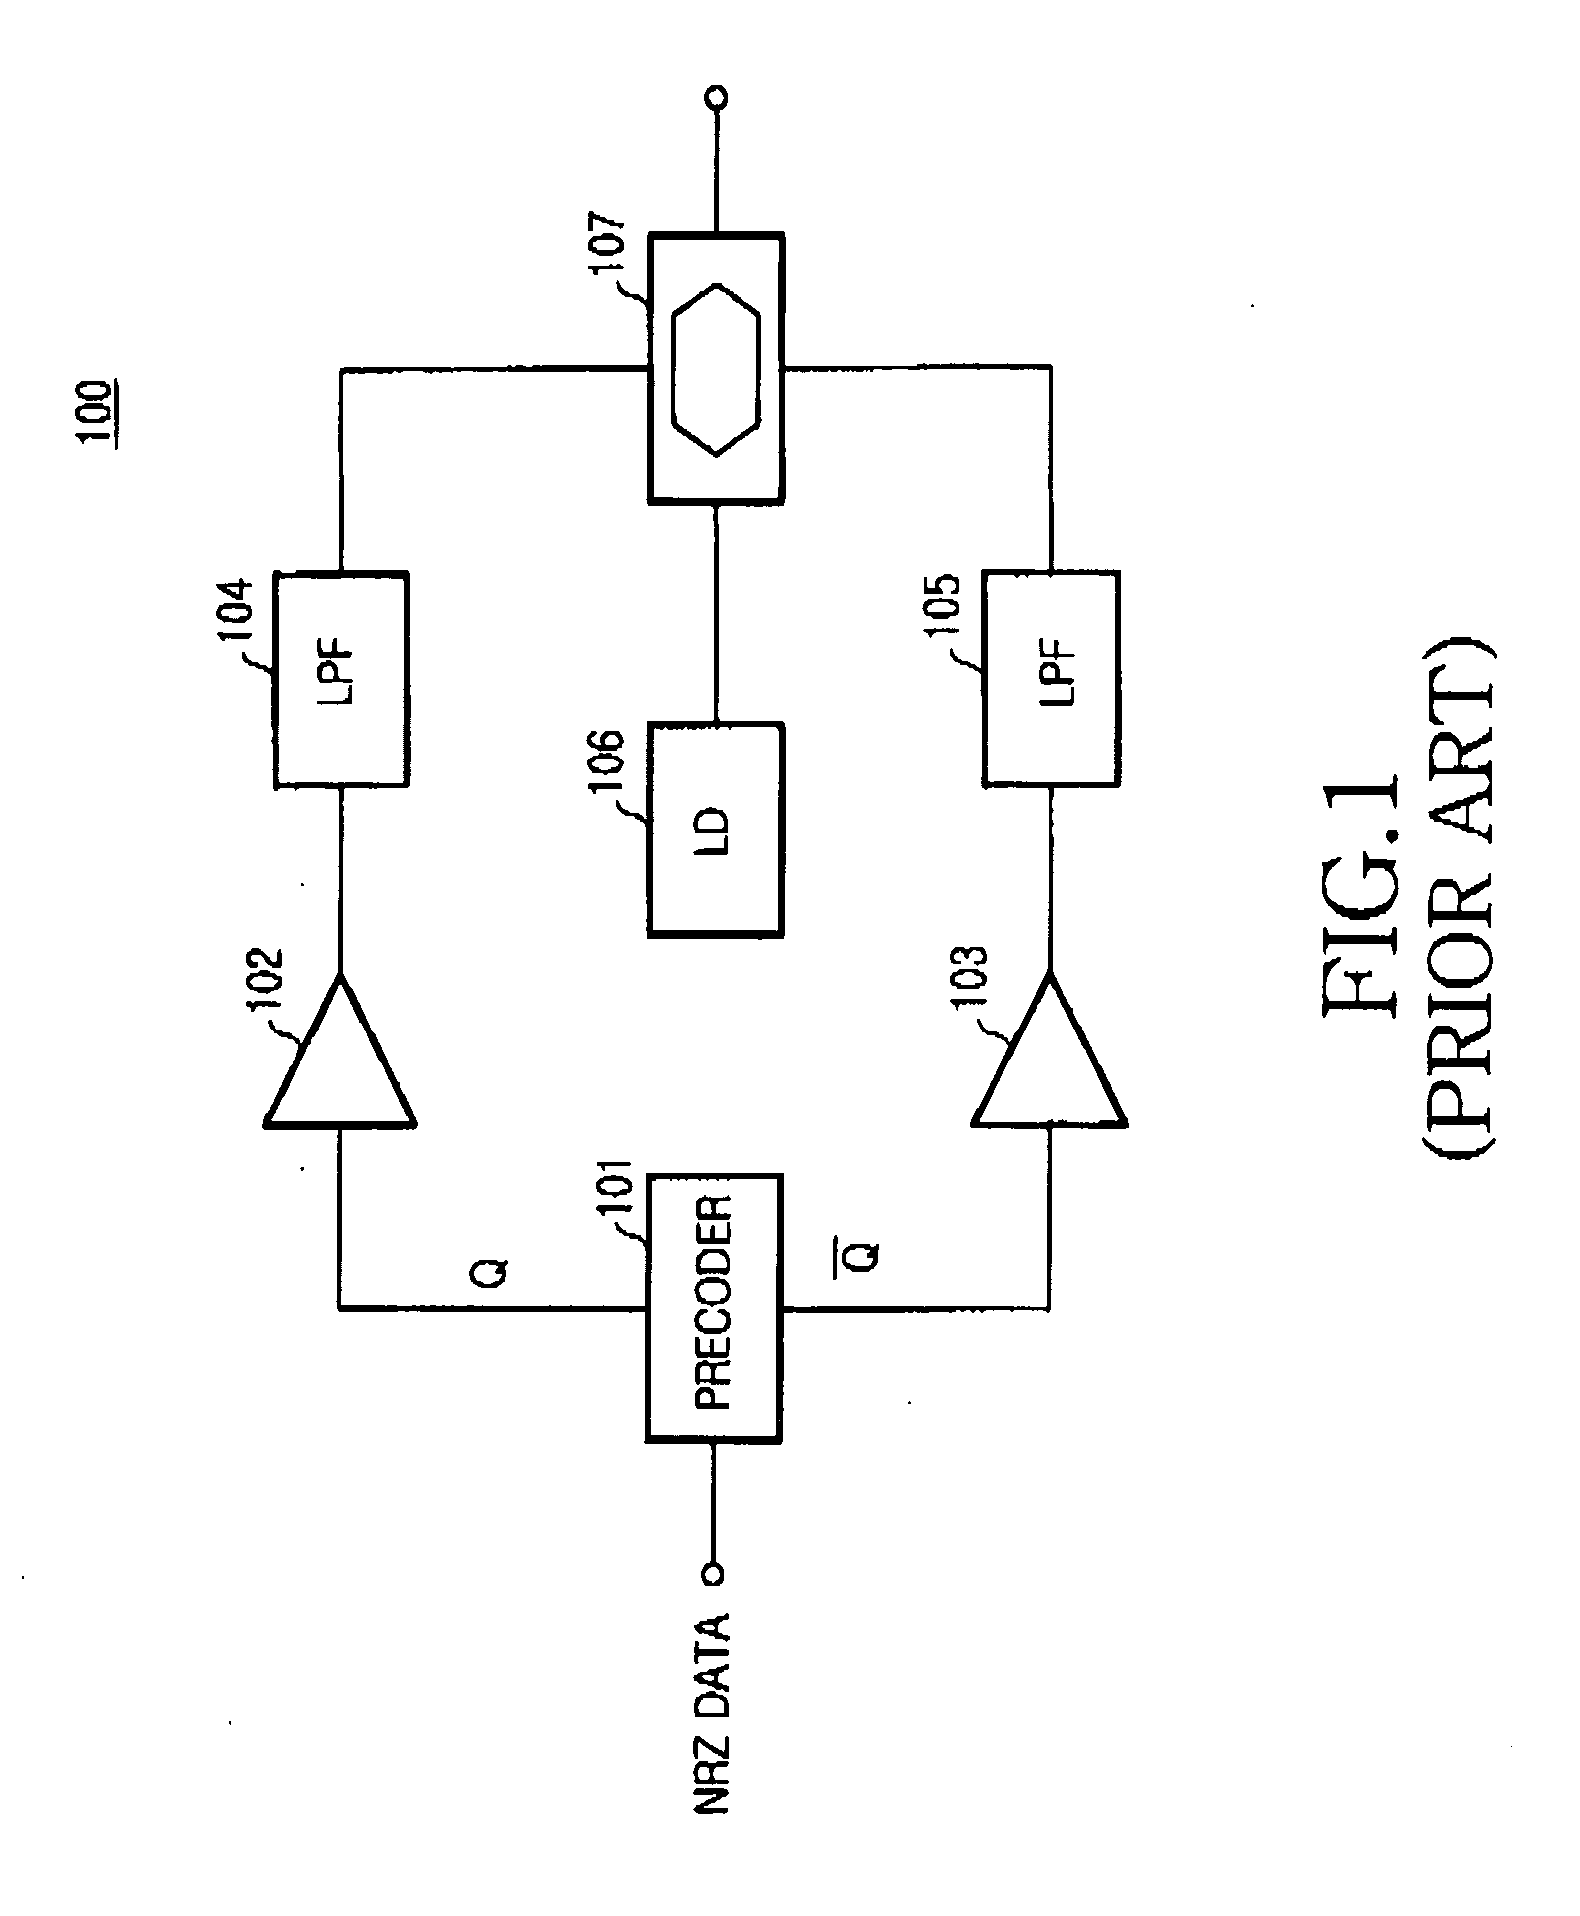 Optical transmission apparatus using duobinary modulation